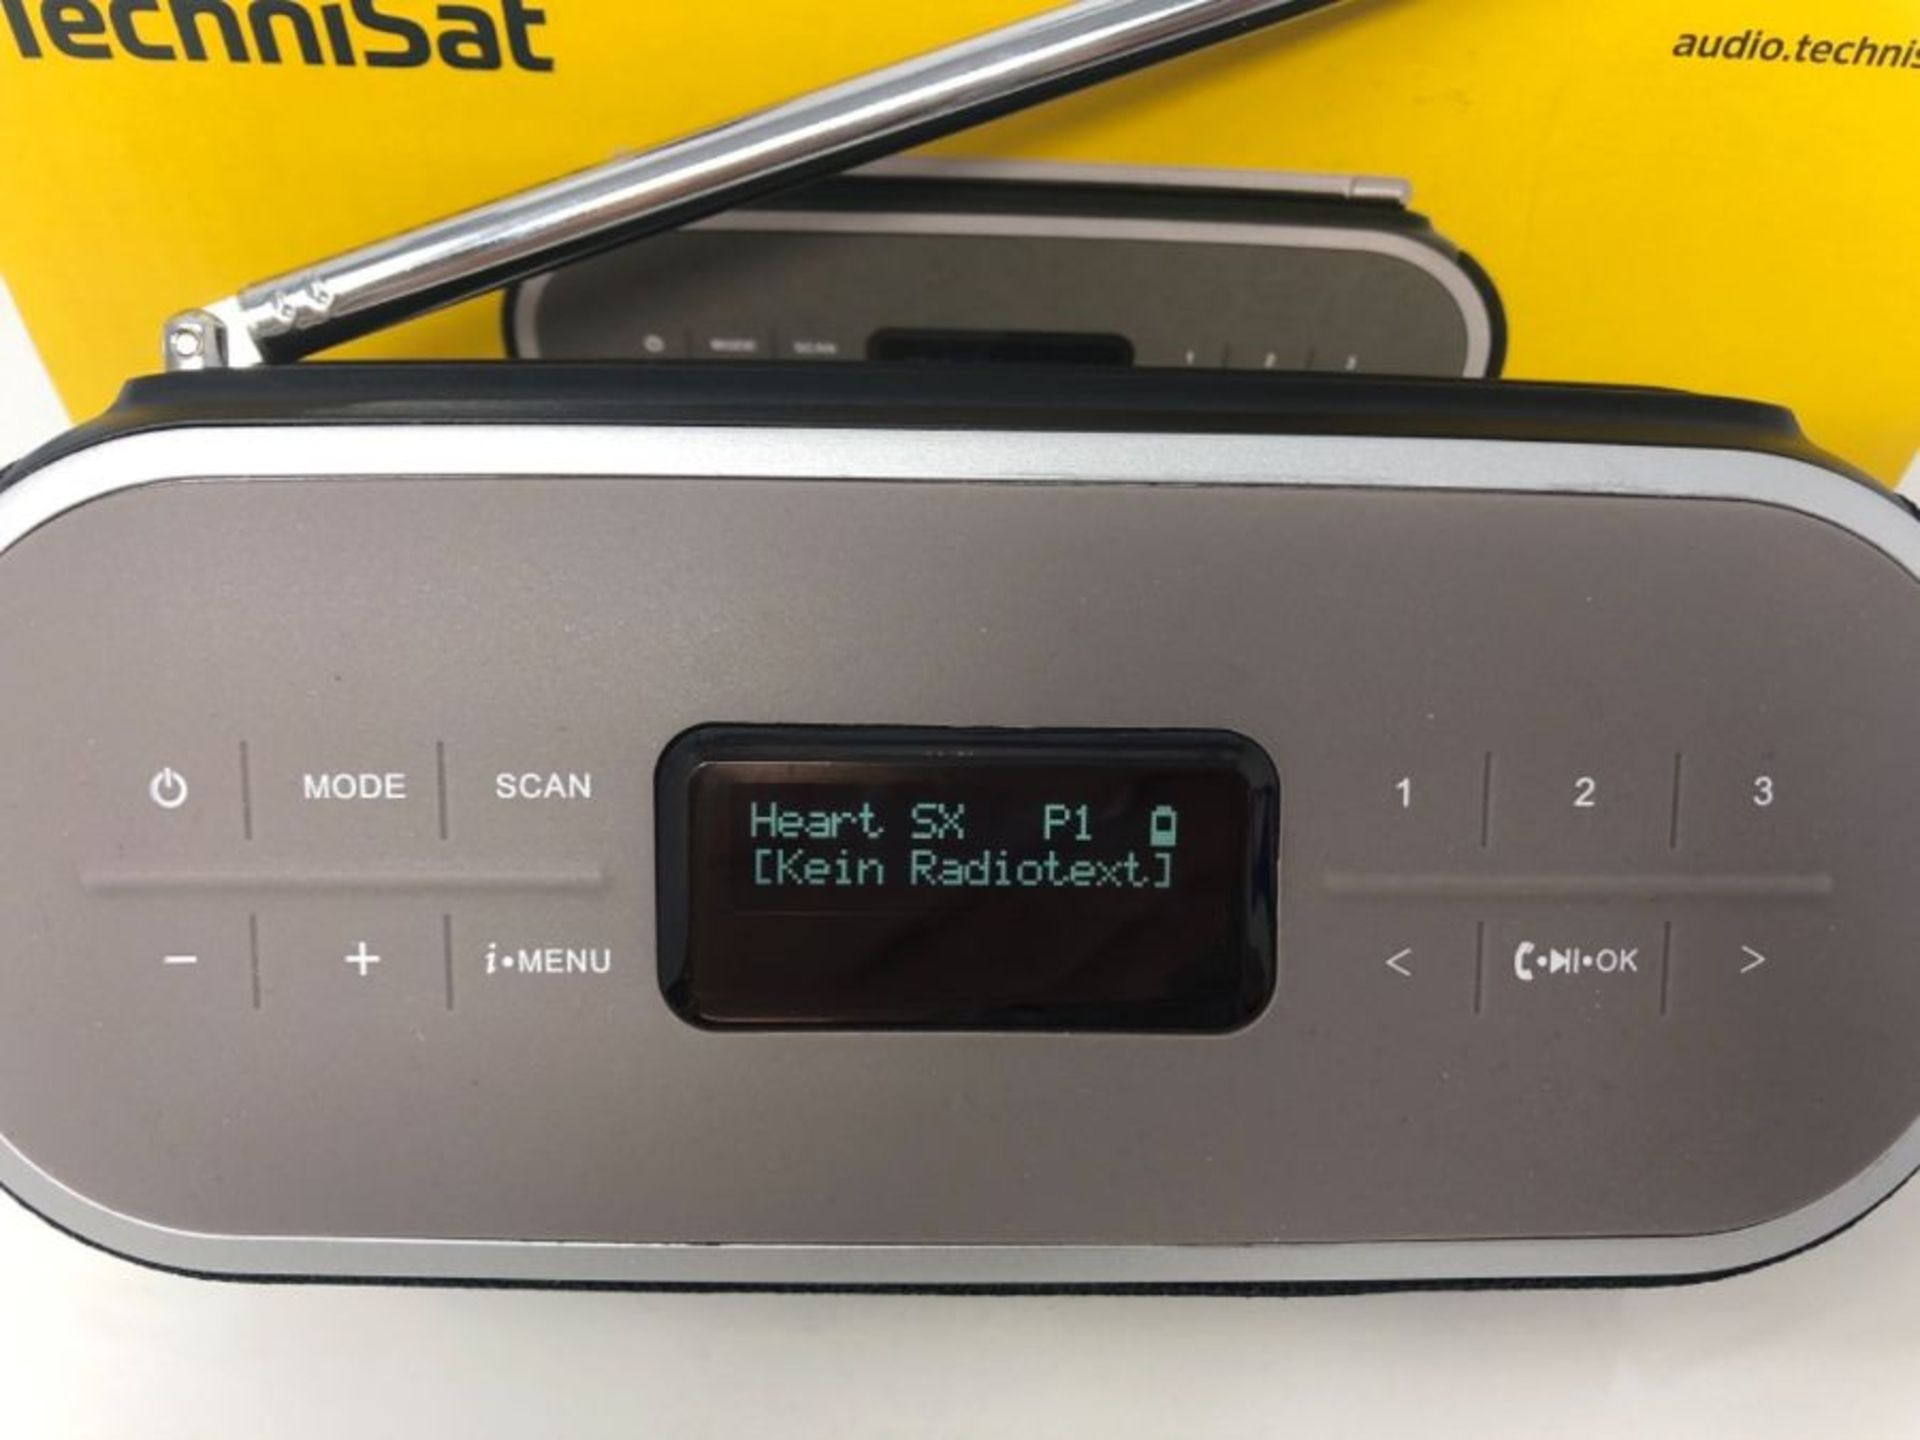 TechniSat Viola BT 1 Portable Bluetooth Speaker with DAB+ Digital Radio (FM, DAB, Cloc - Image 3 of 3